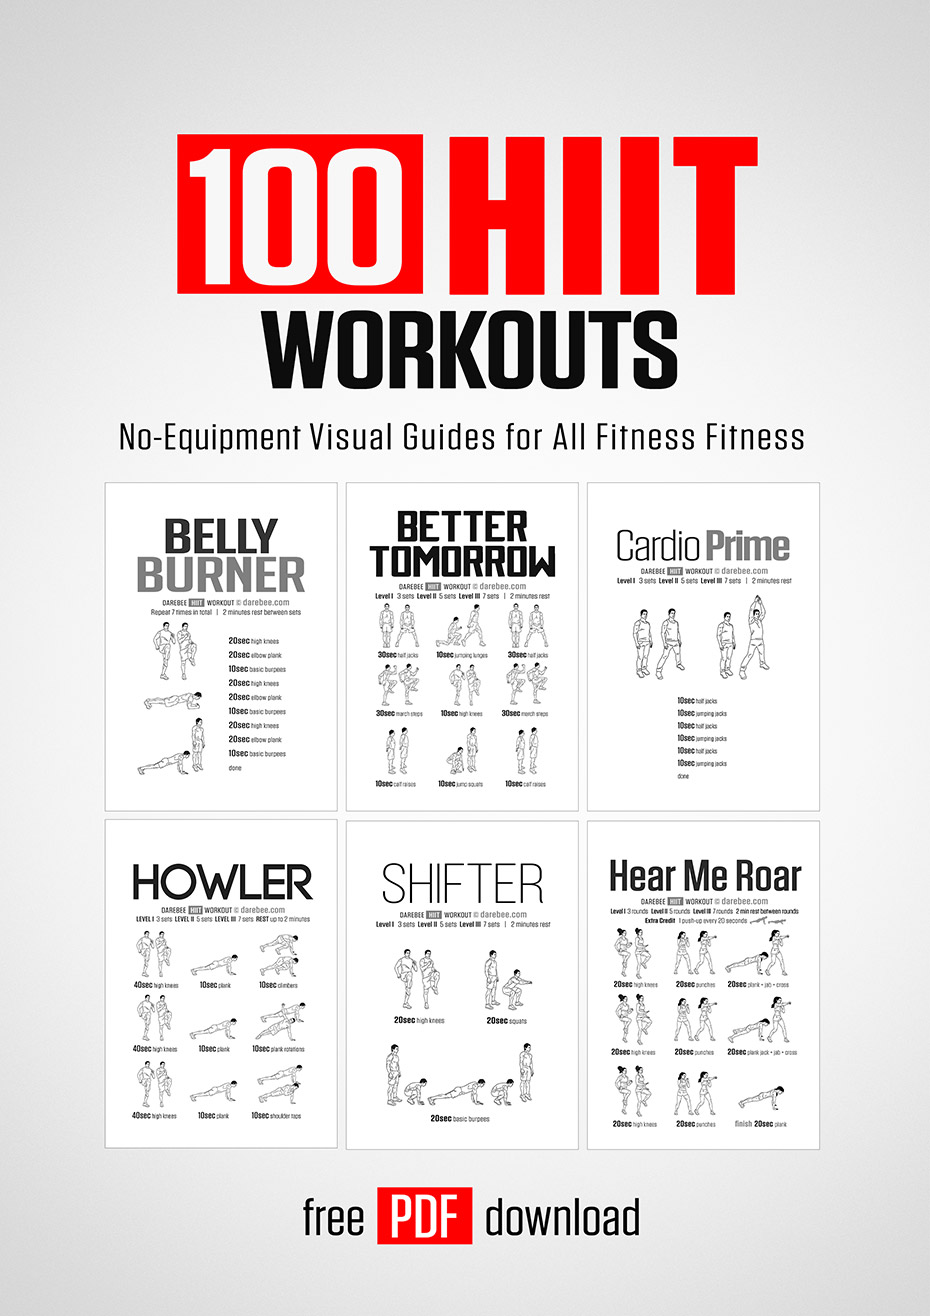 hiit-workout-plan-hiit-exercises